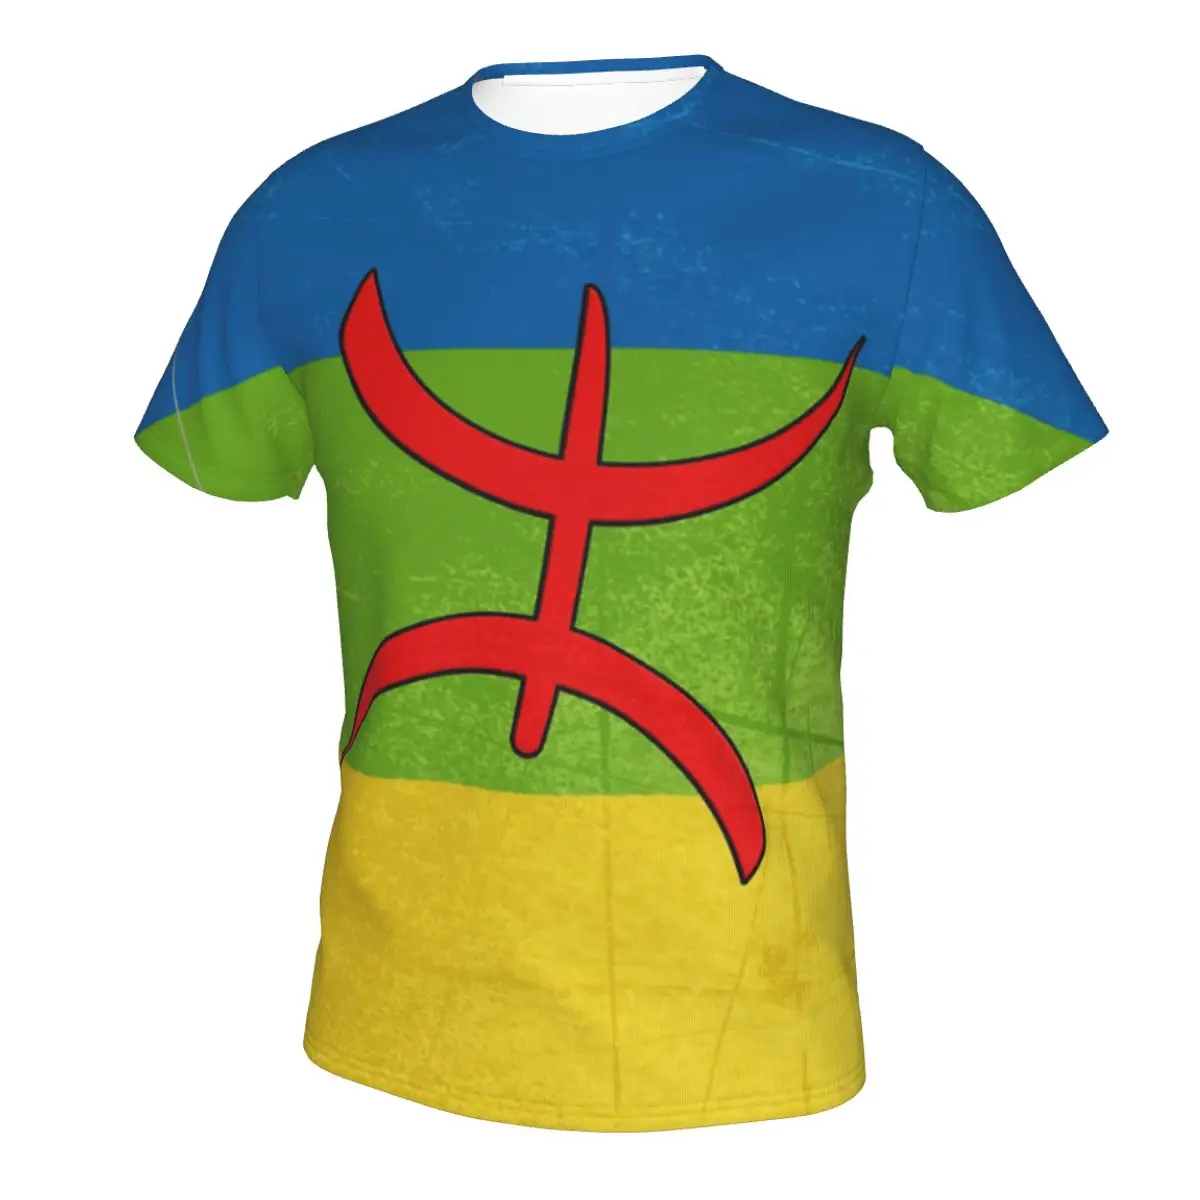 

Amazigh Flag - Berber Flag T-shirt Promo Baseball Casual Graphic Men's T Shirt Print R333 Humor Graphic Tops Tees European Size